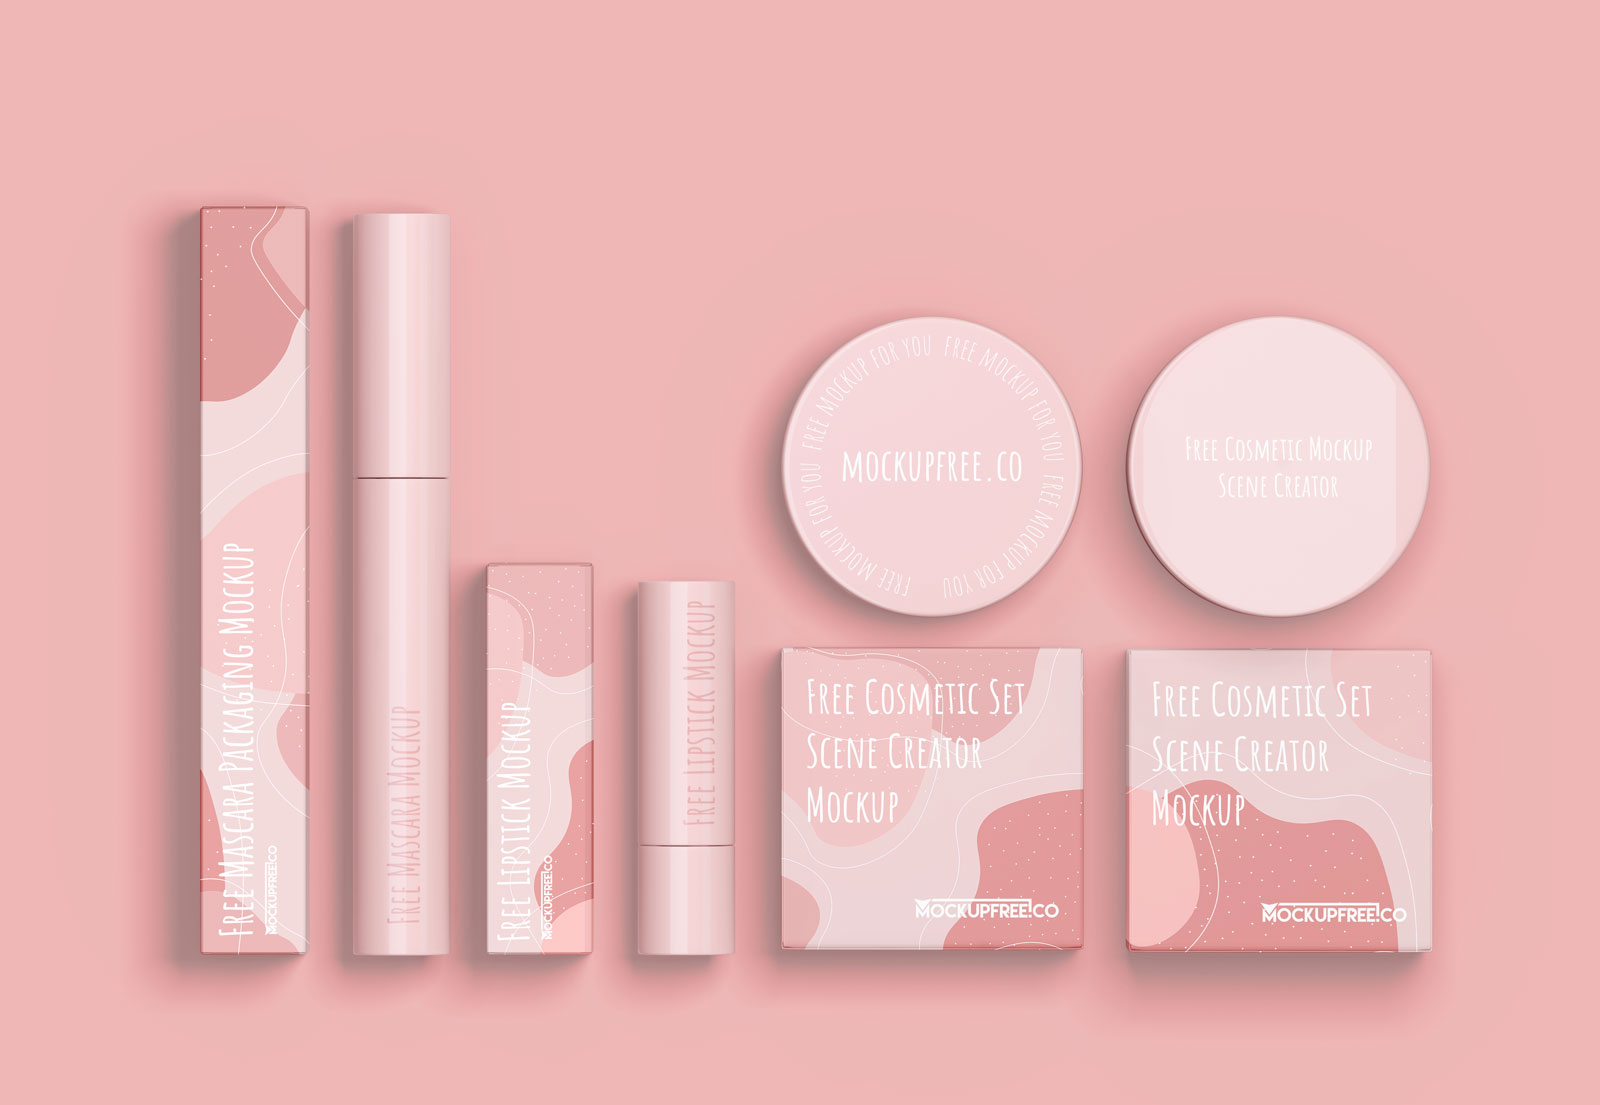 Free Cosmetic Scene Creator Mockup Product Packaging